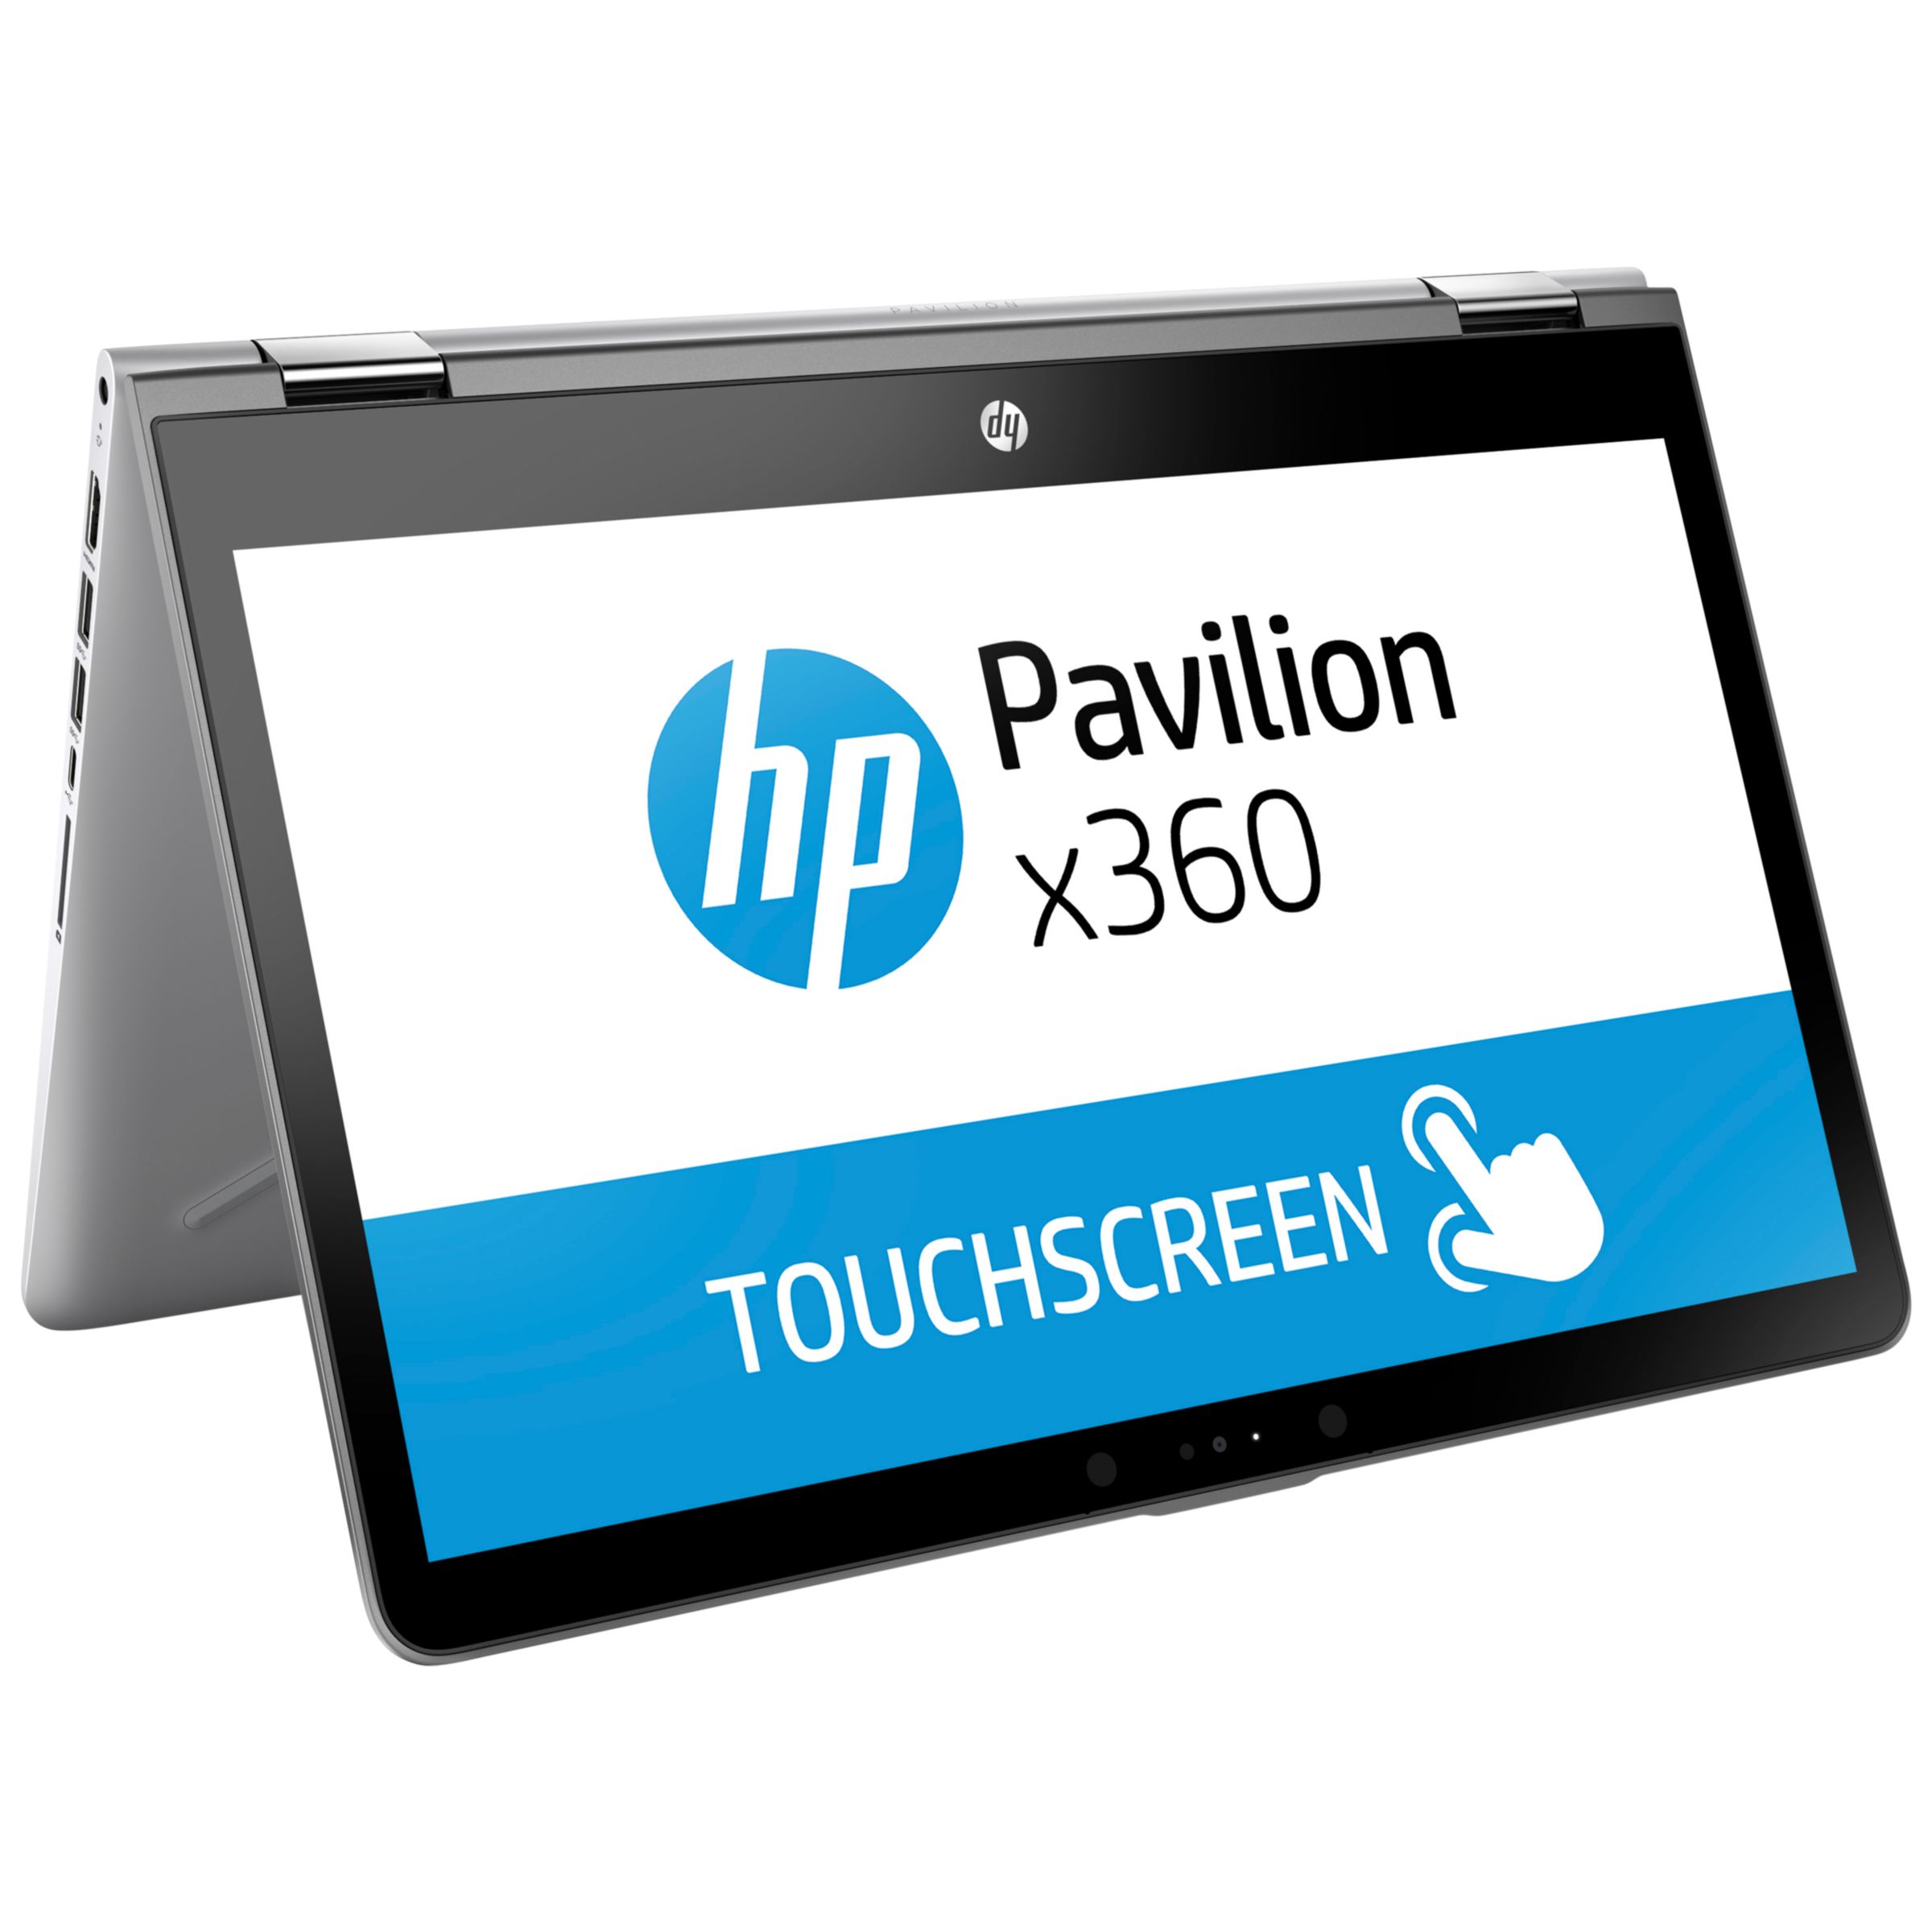 HP Pavilion X360 14-ba031na Laptop, Intel Core i5, 8GB RAM, 128GB M.2 SSD, 14” Full HD Touch Screen, Mineral Silver